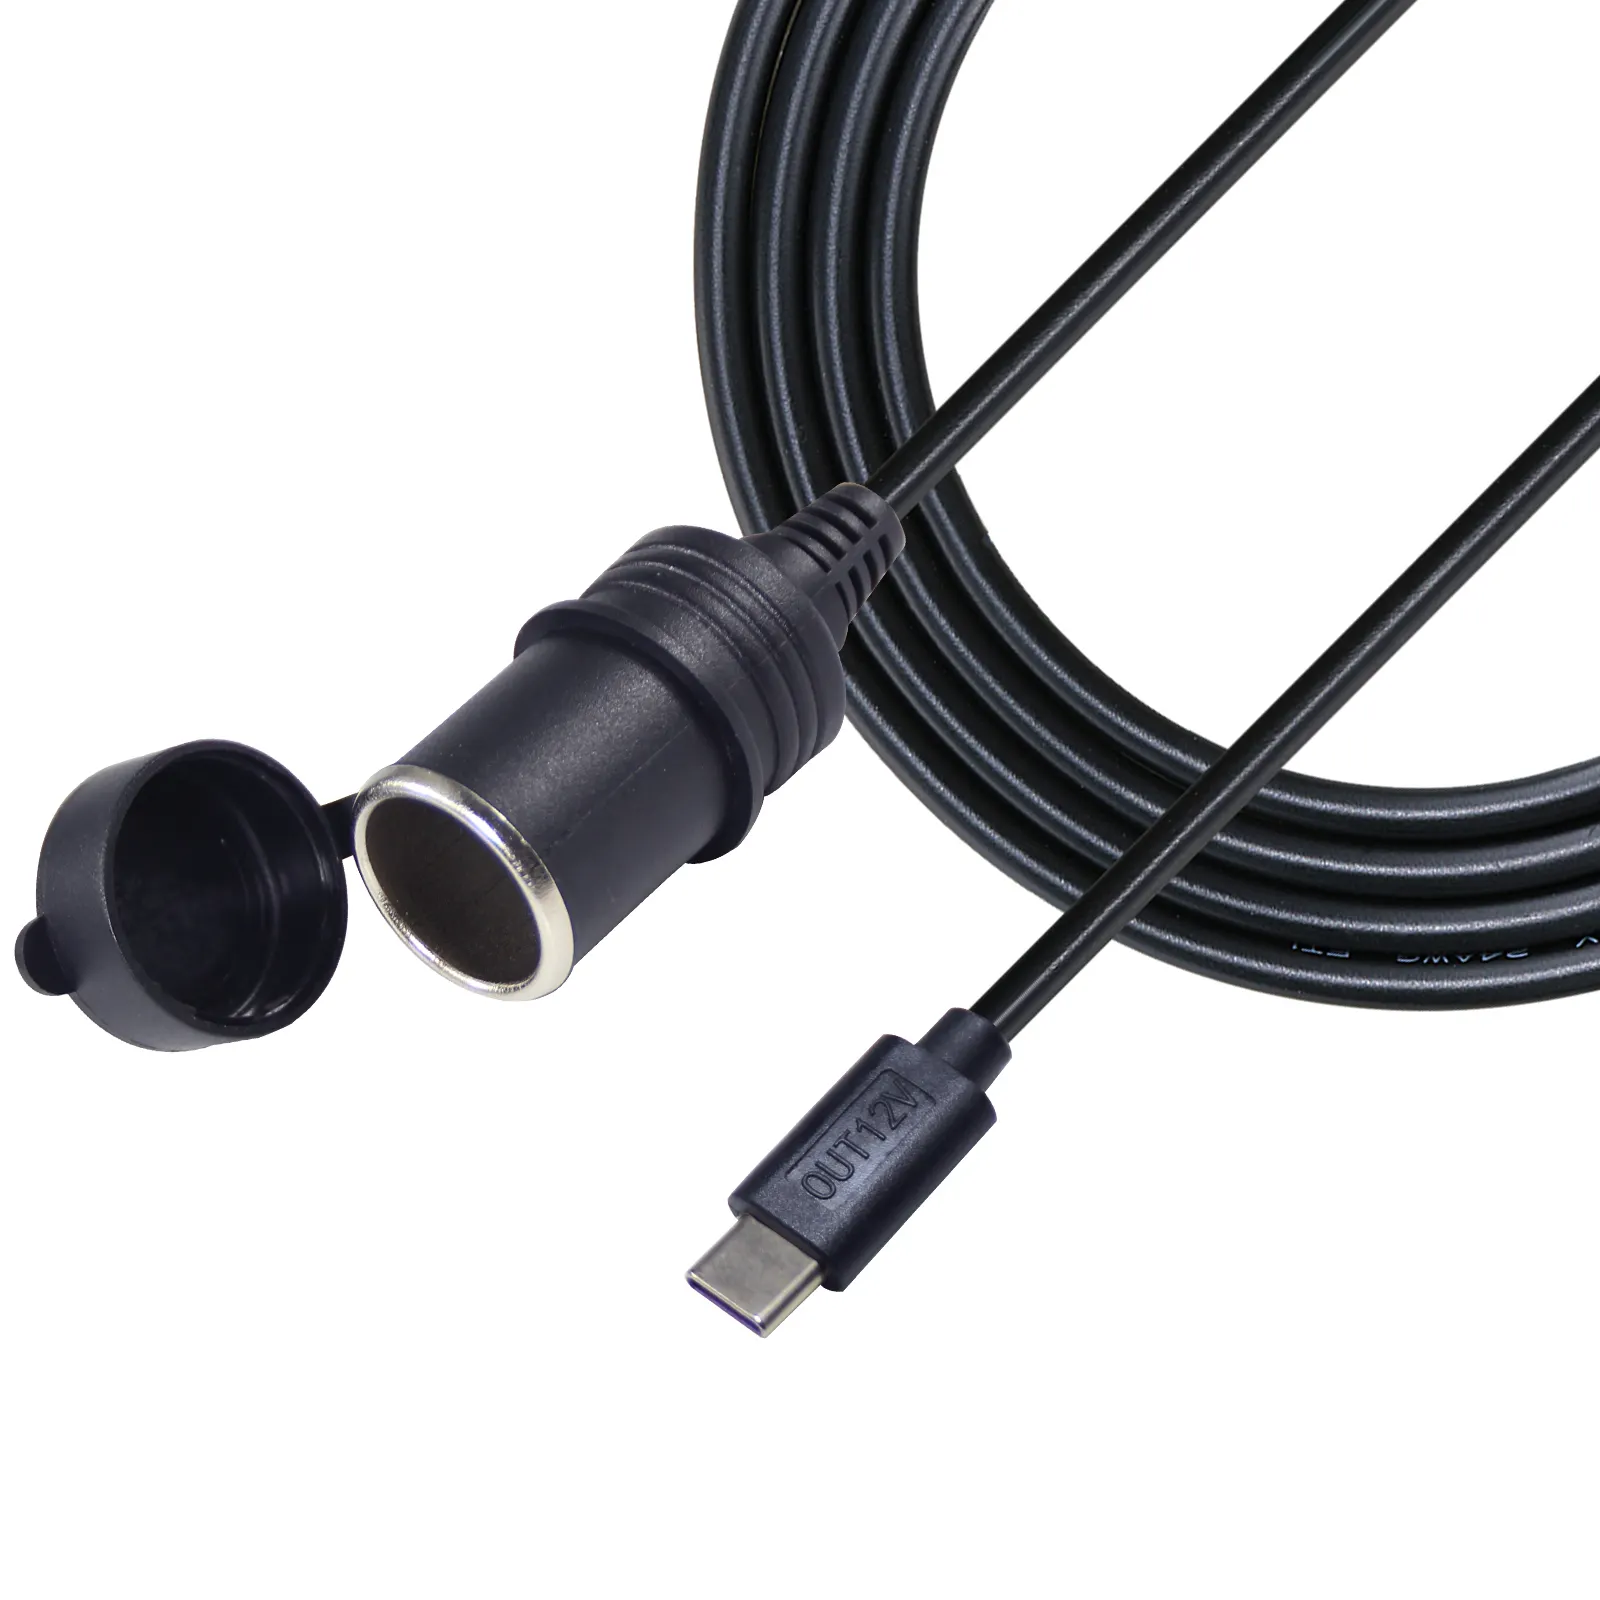 12V3a Car Cigarette Lighter Socket Converter Cable For Vehicle Electrical Device Usb C To 12V Adapter